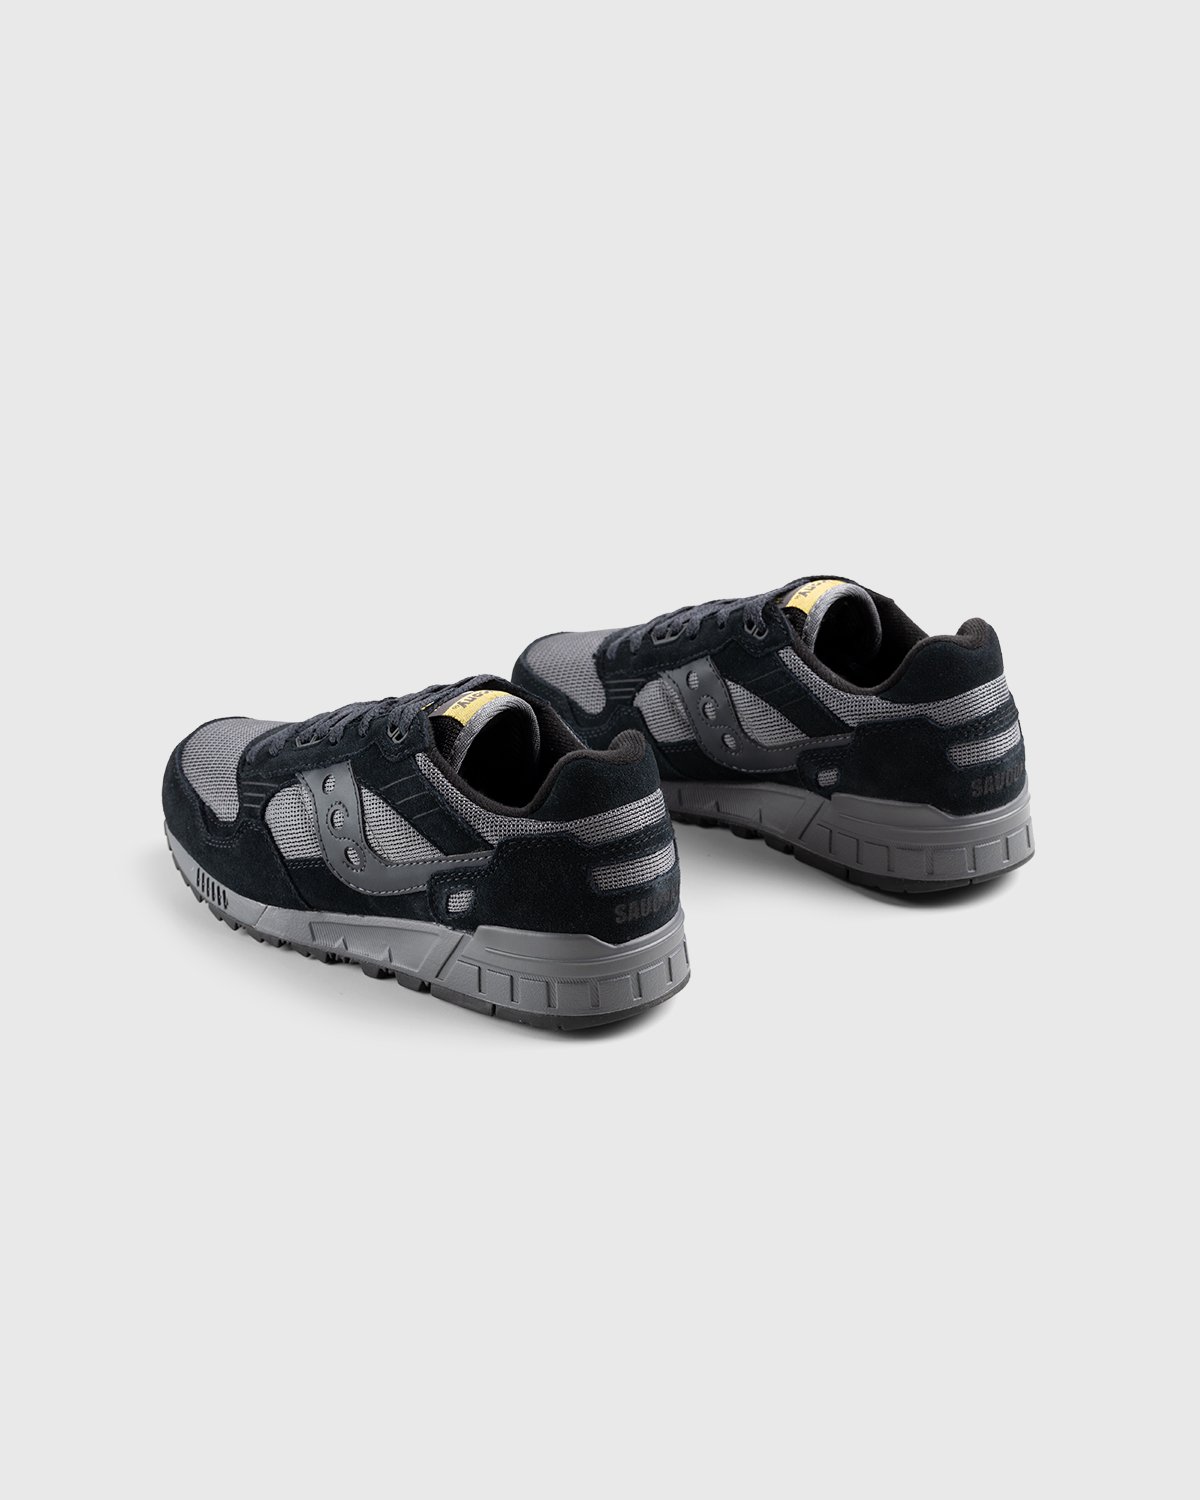 Saucony - Shadow 5000 Limo - Footwear - Black - Image 4